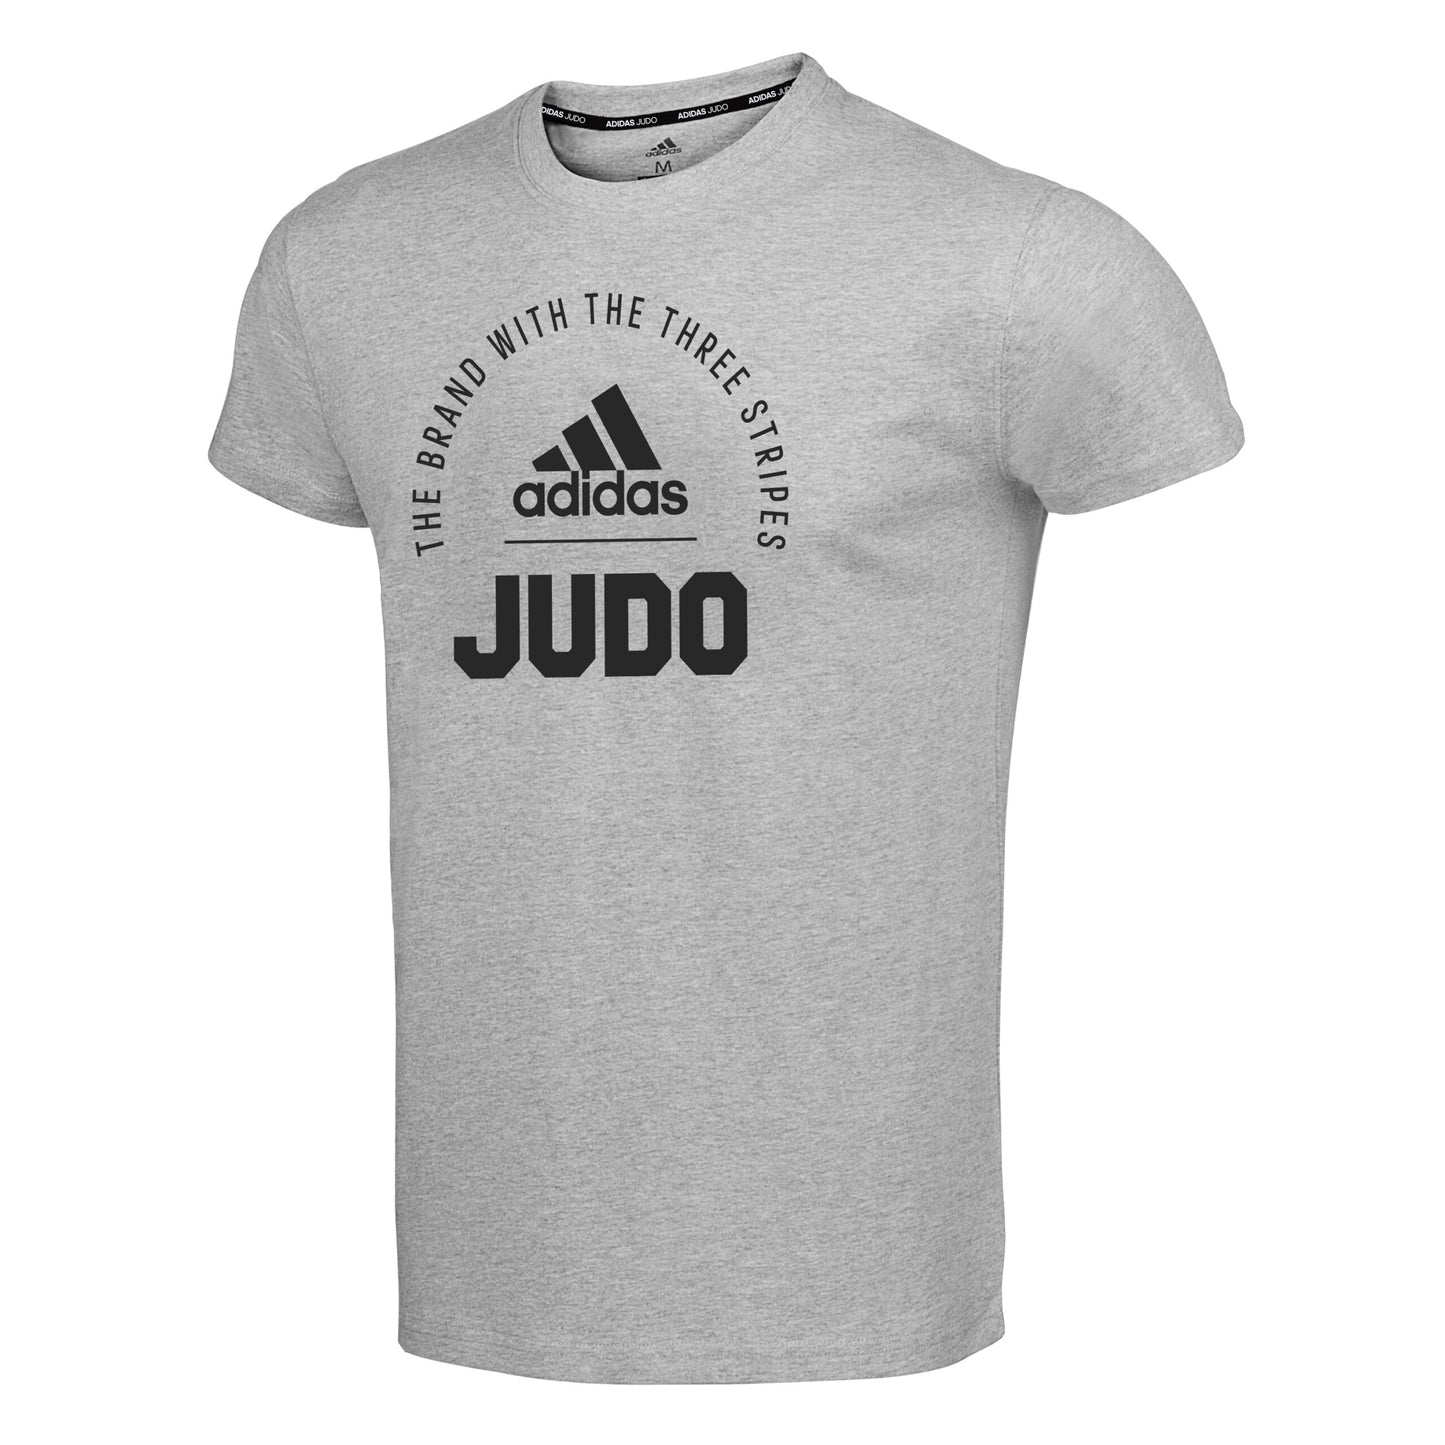 Clts21 J Adidas Judo T Shirt Grey 02